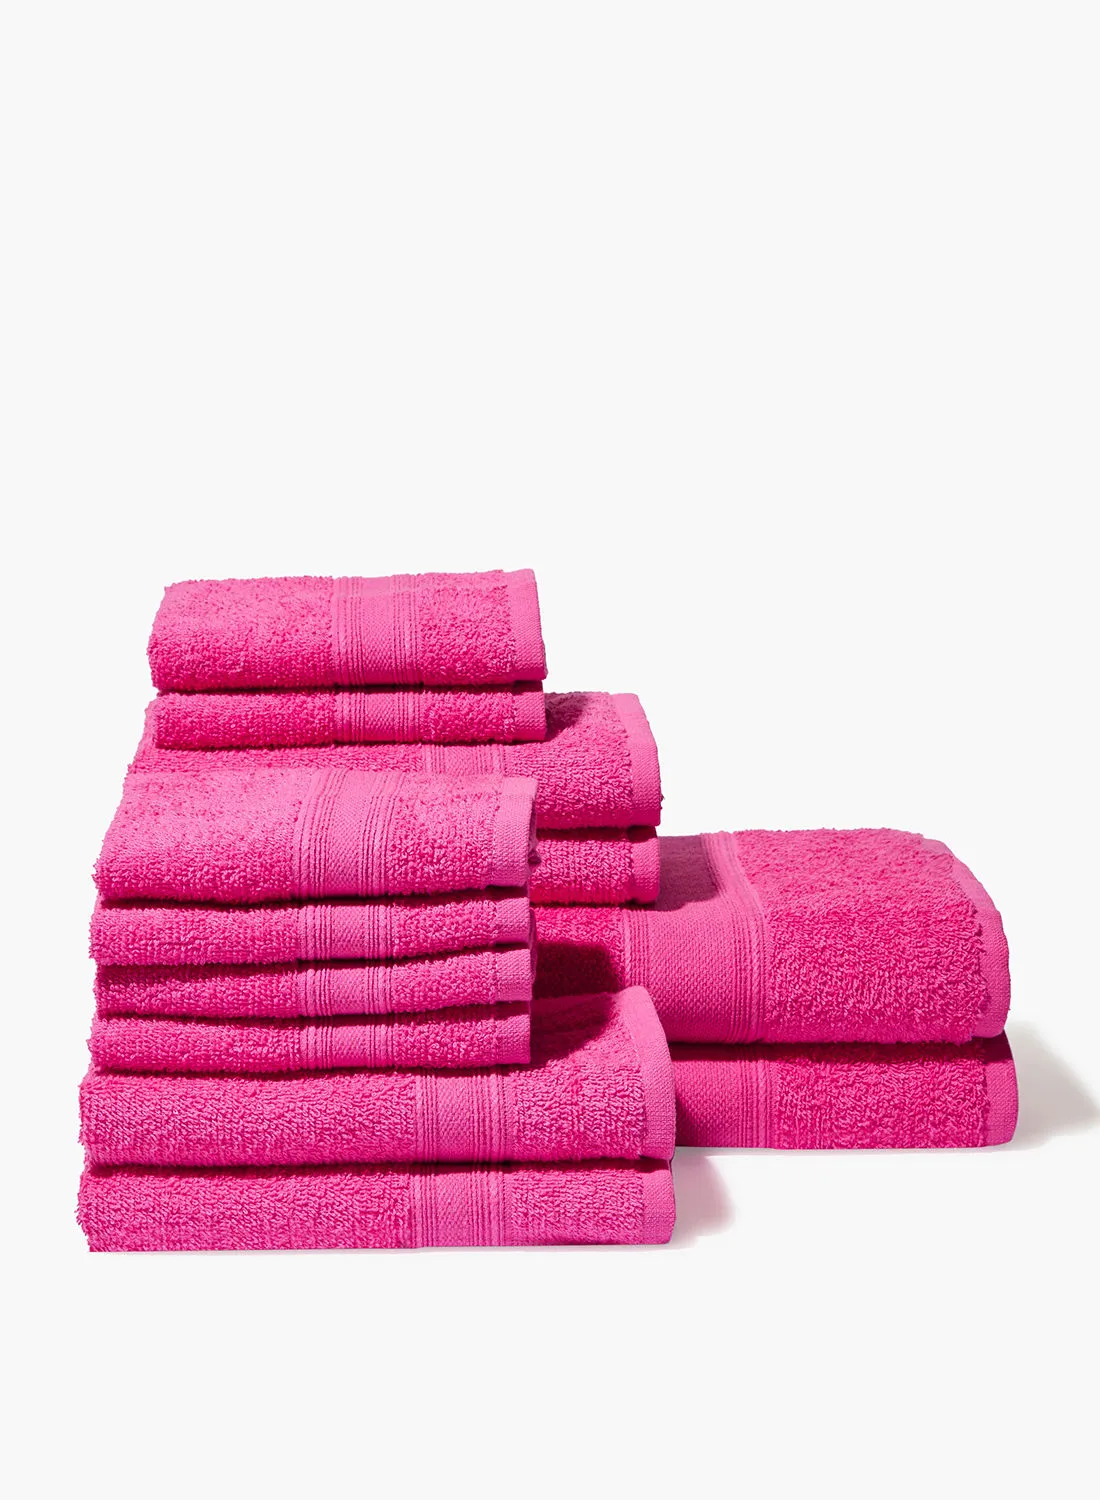 Amal 12 Piece Bathroom Towel Set - 400 GSM 100% Cotton Terry - 12 Face Towel - Fuchsia Color -Quick Dry - Super Absorbent